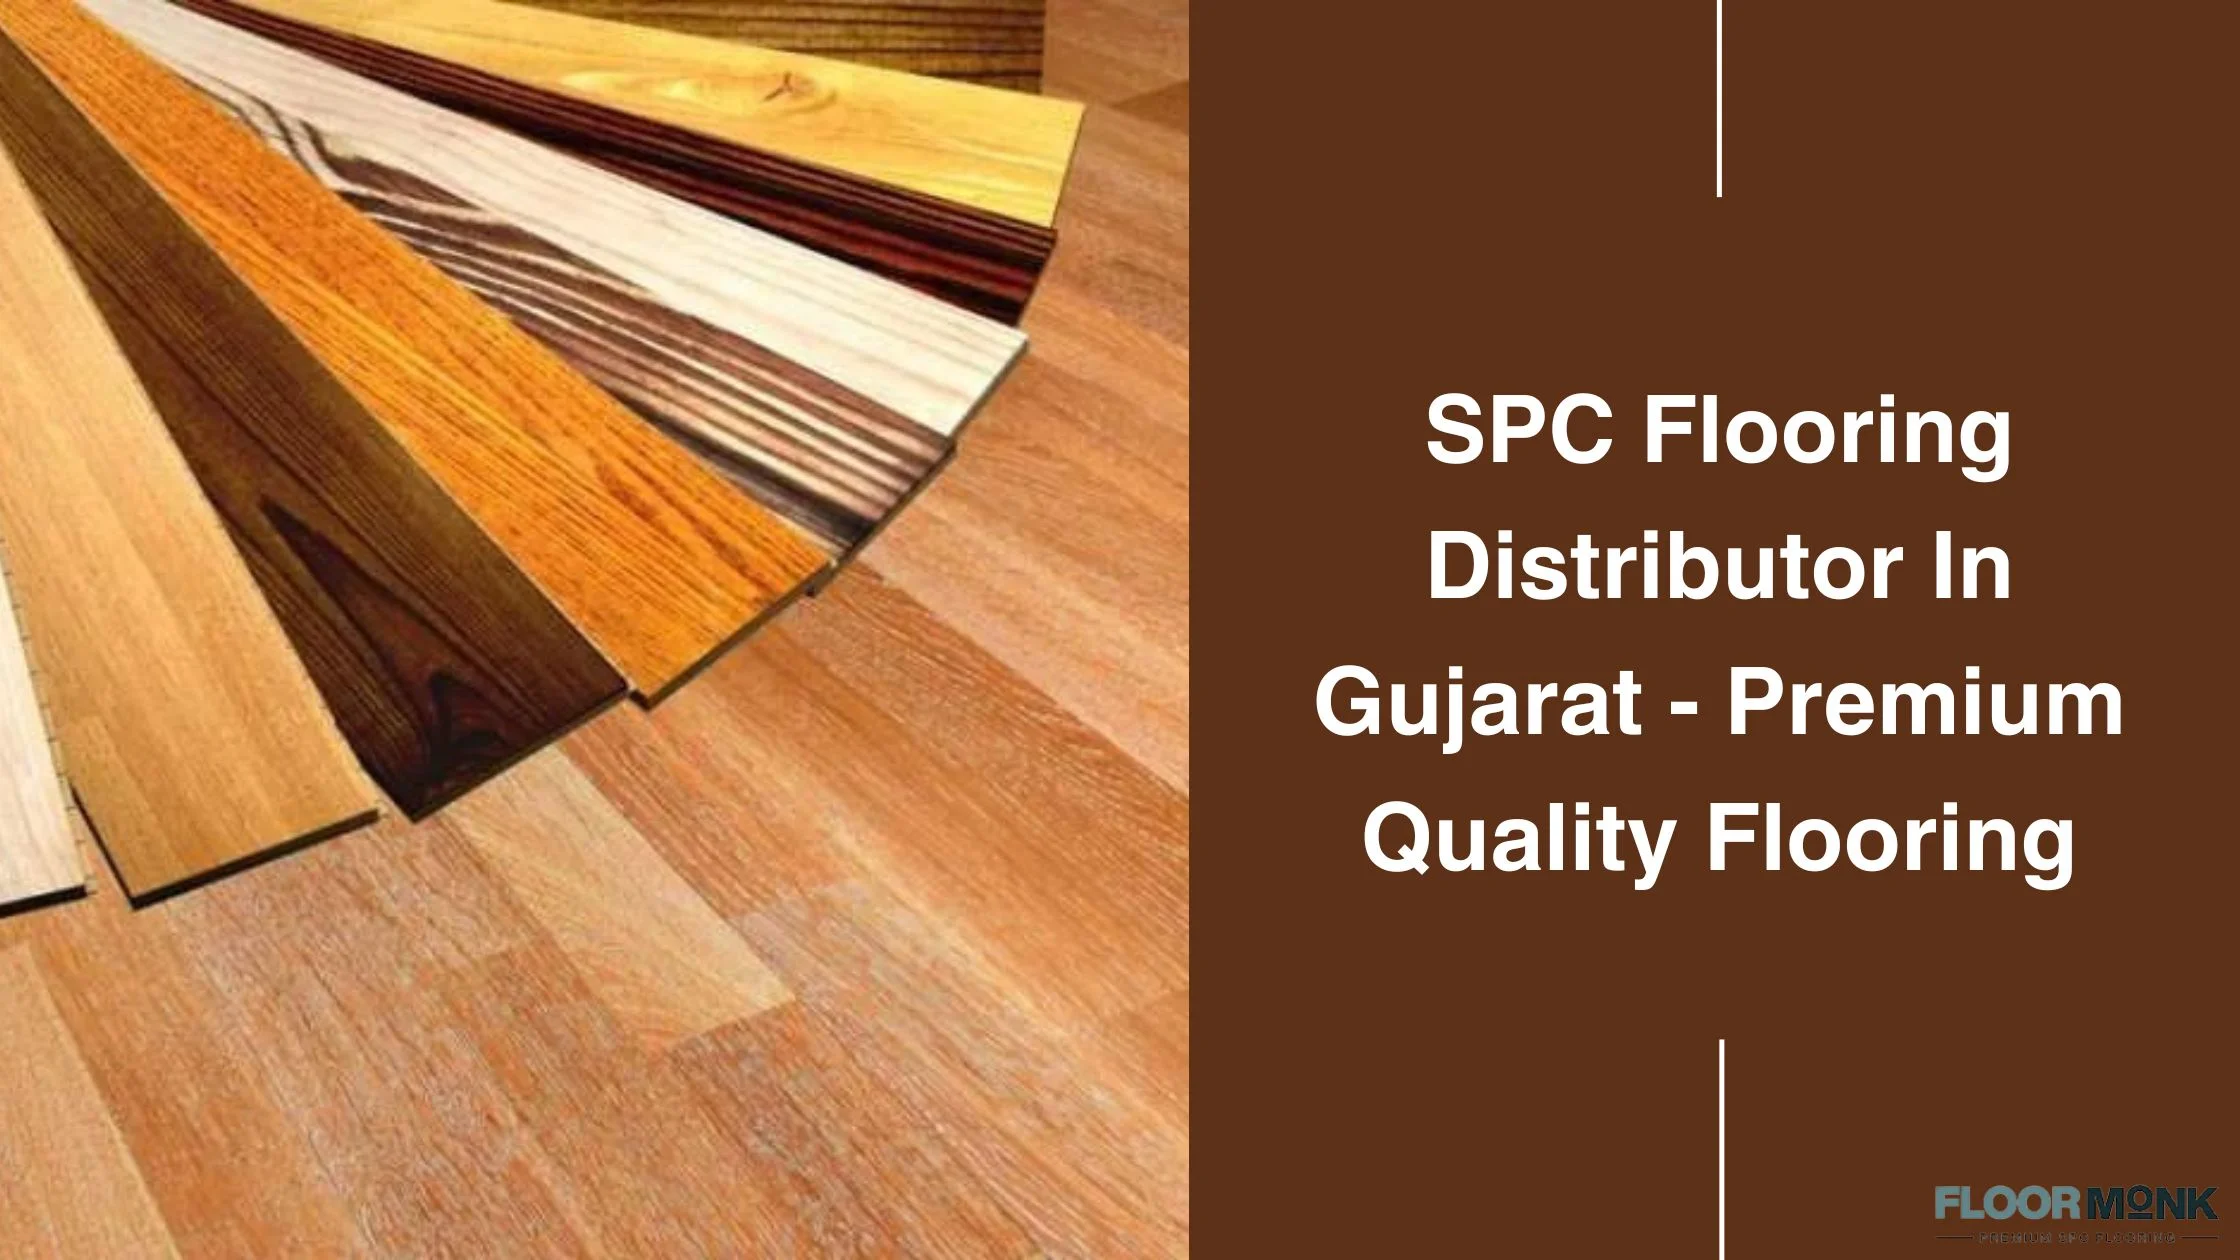 SPC Flooring Distributor In Gujarat - Premium Quality Flooring